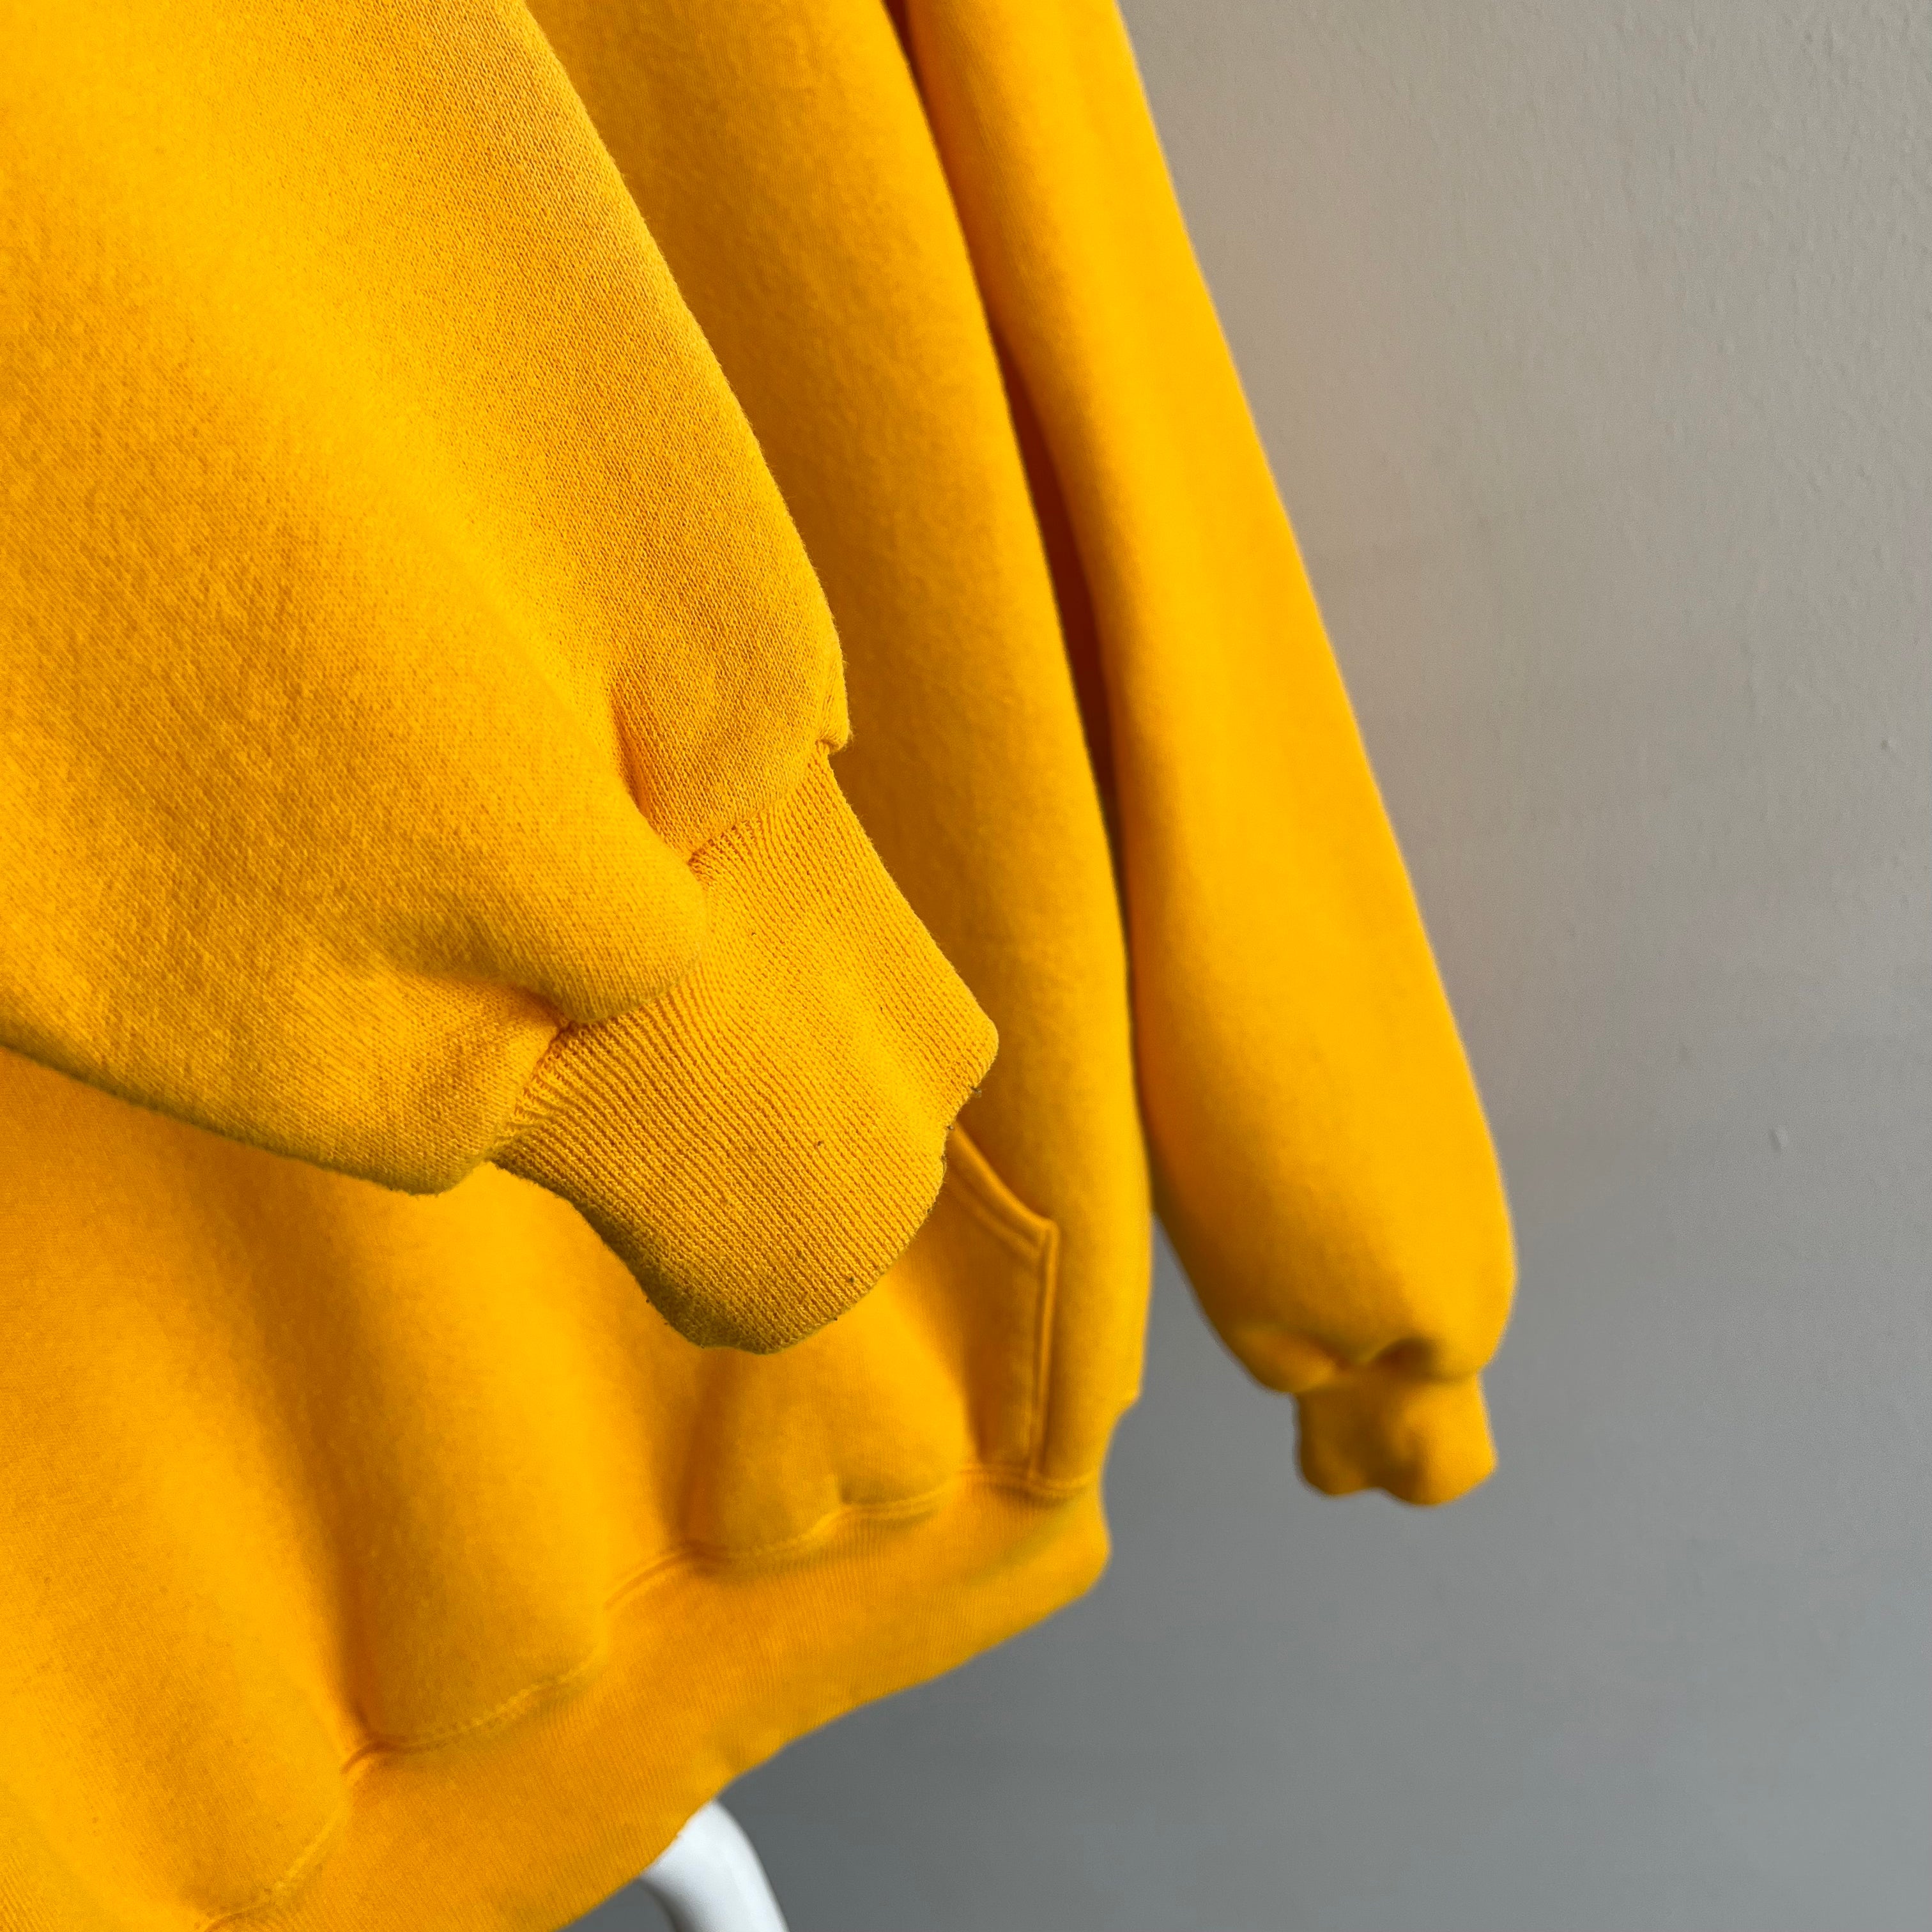 1980s Mustard/Marigold Yellow Pullover Hoodie